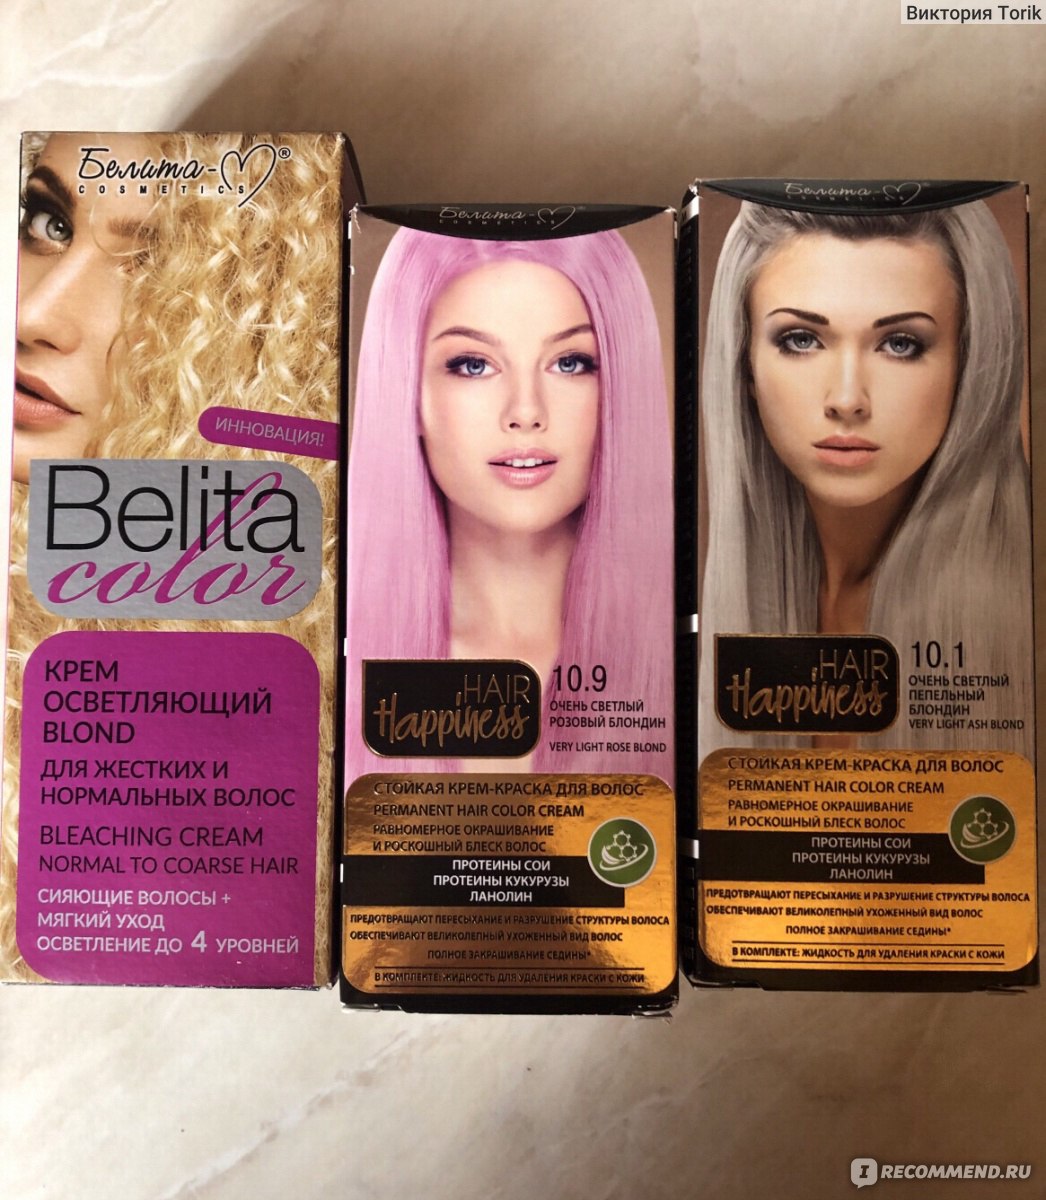 Краски для волос в интернет-магазинах в витебске